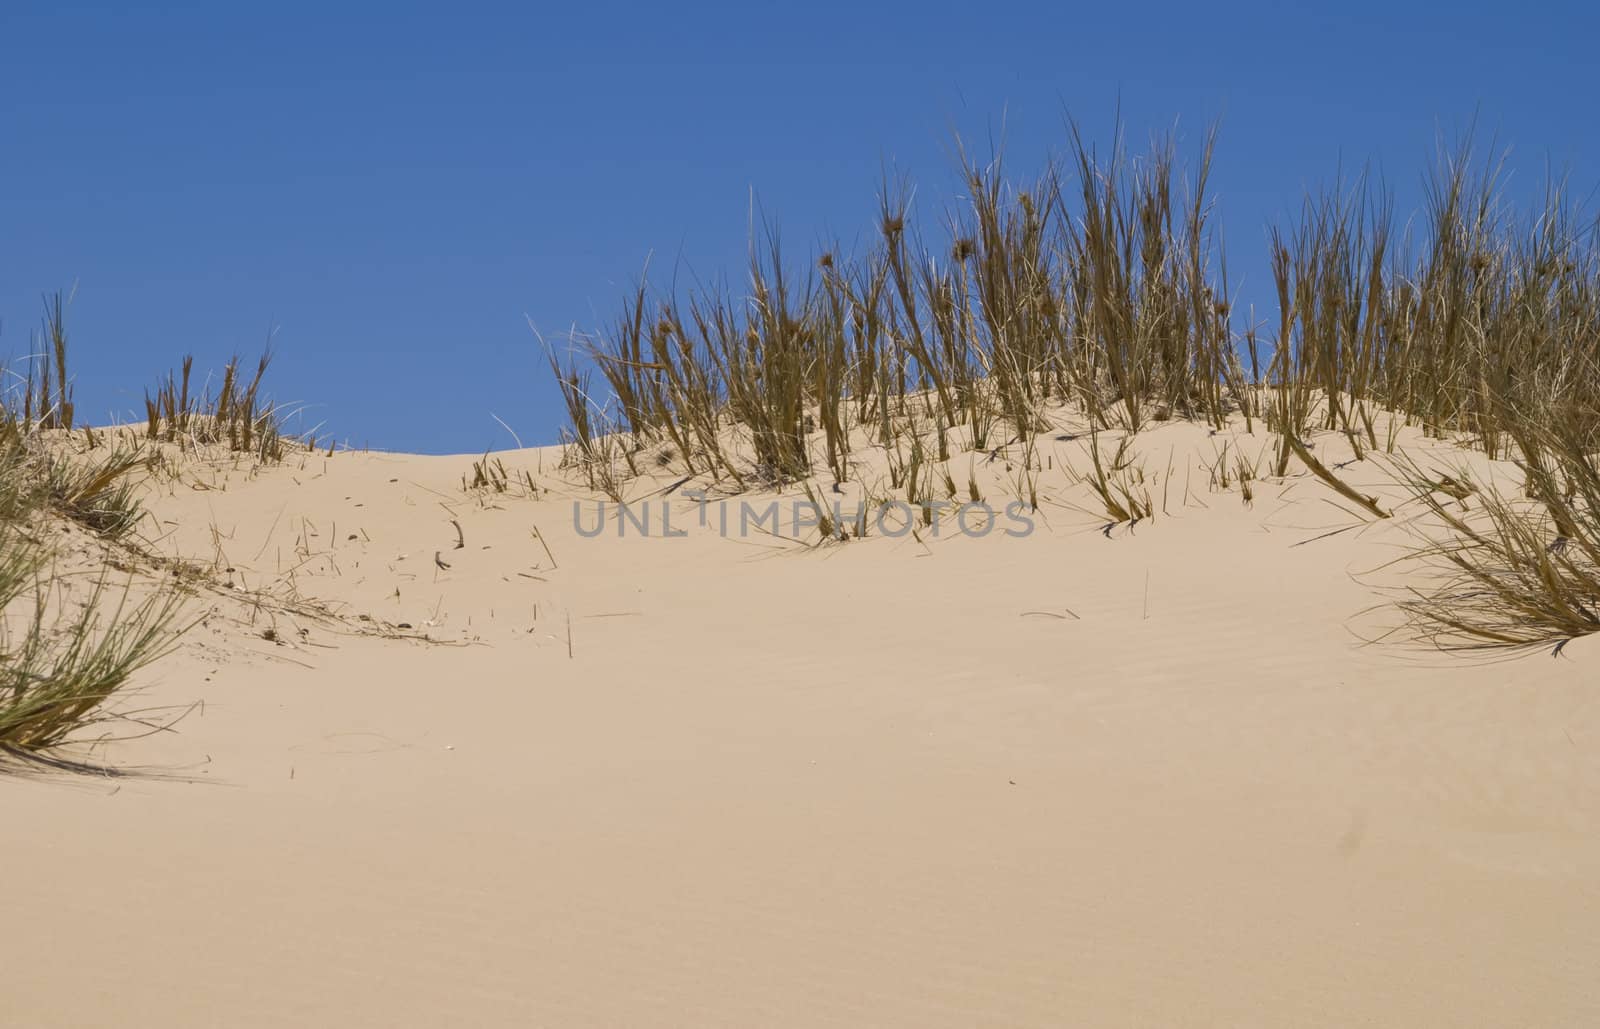 Sand dune against a blue sky in Western Australia.